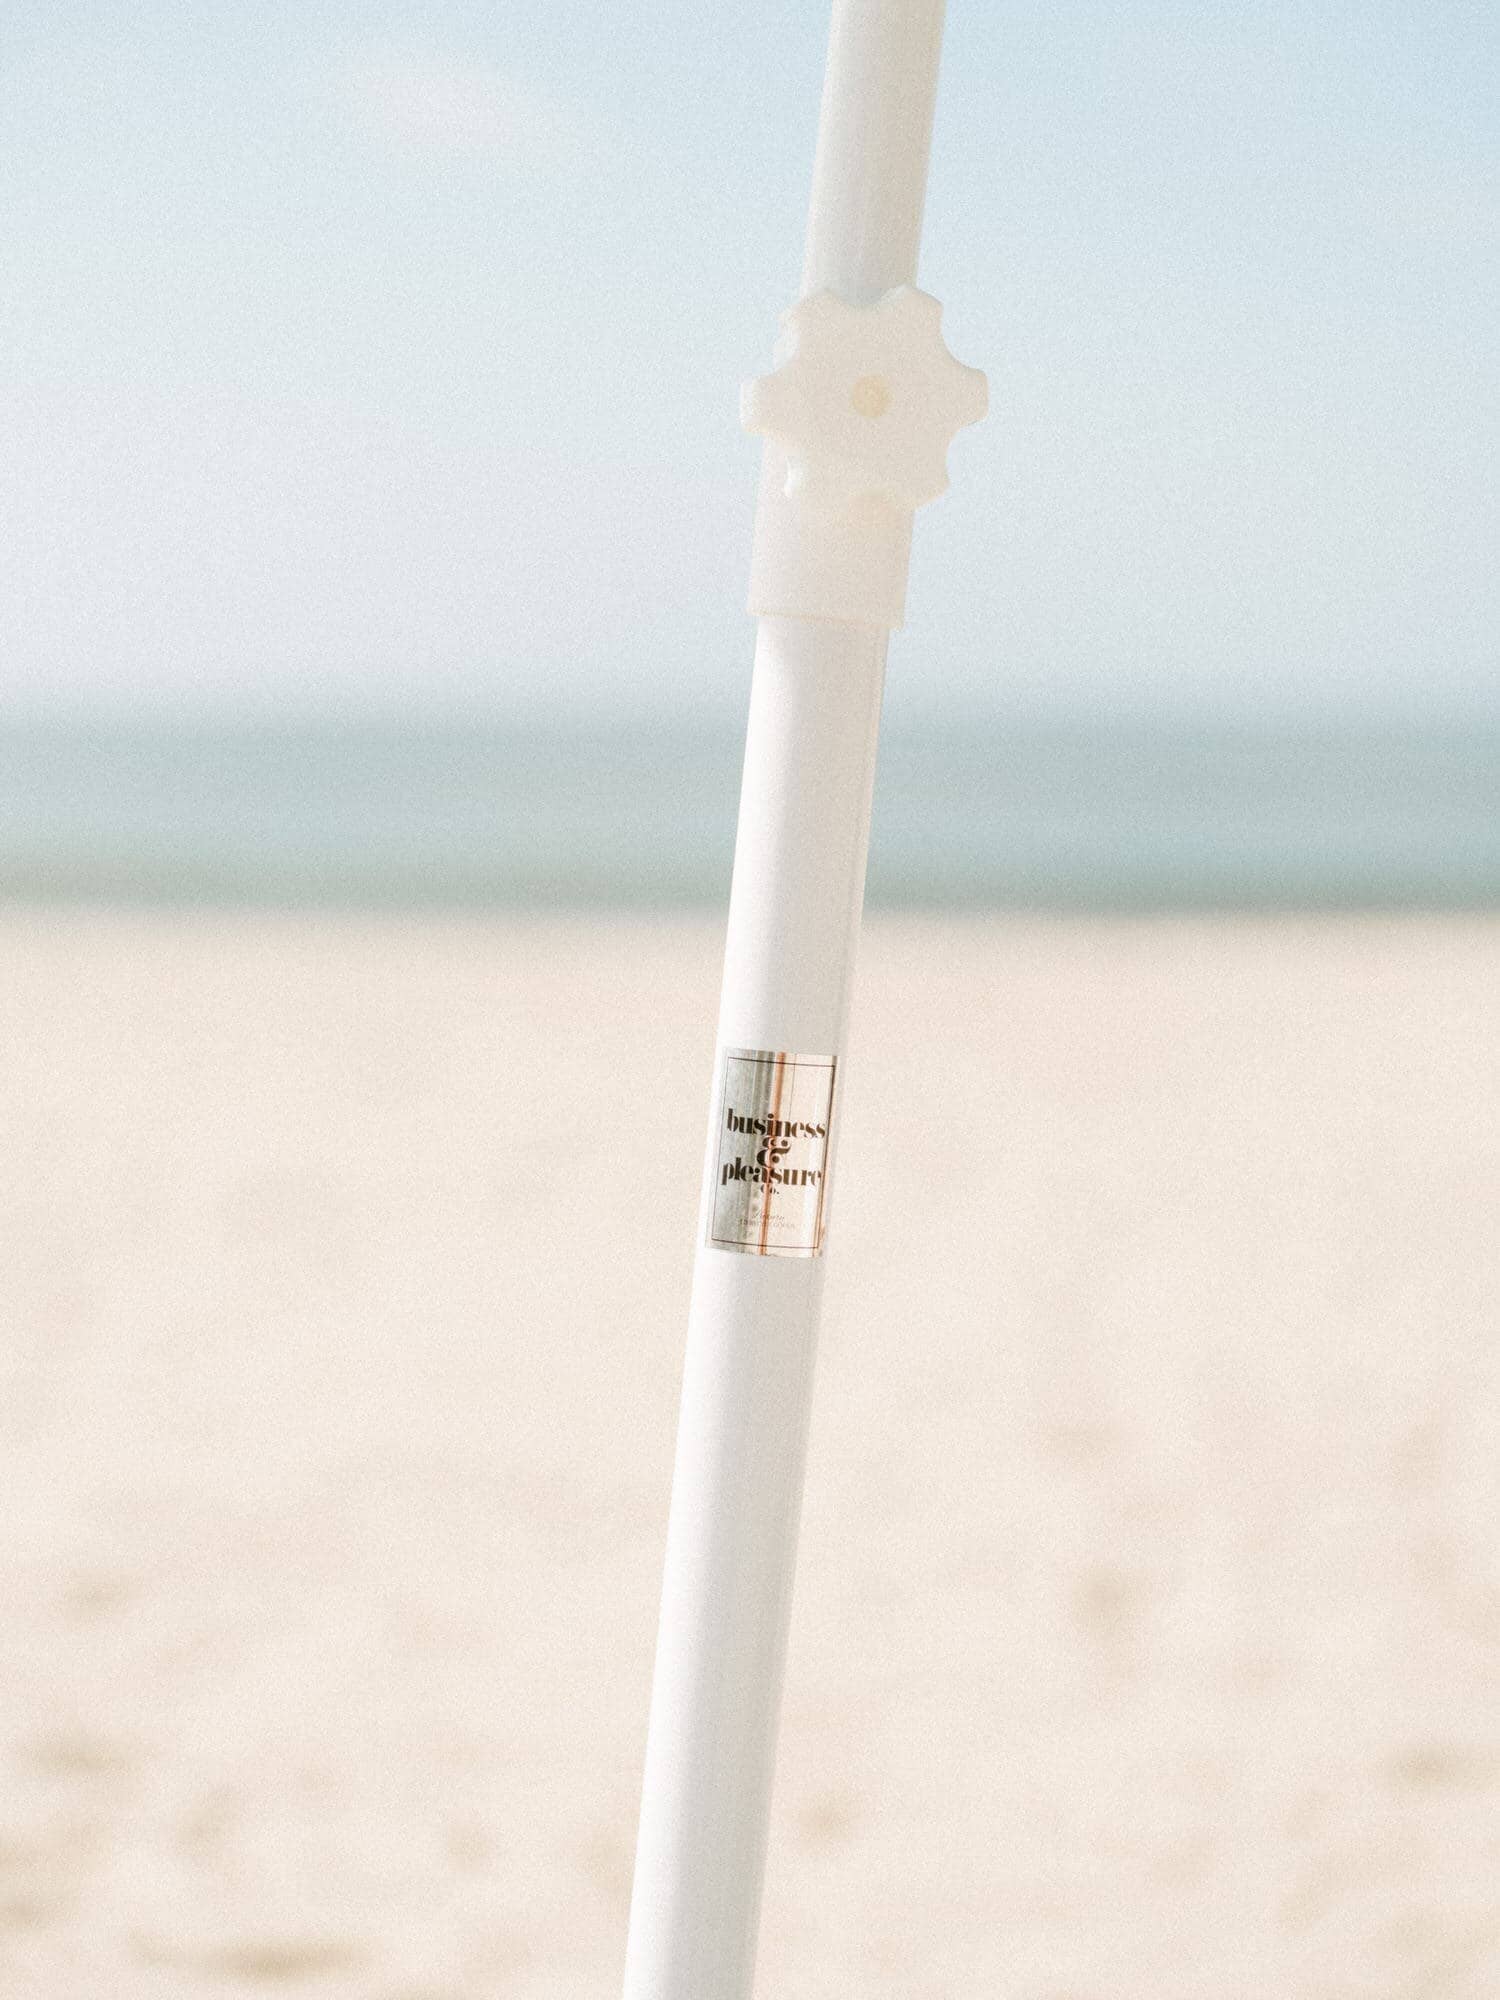 Close up shot of family beach umbrella pole